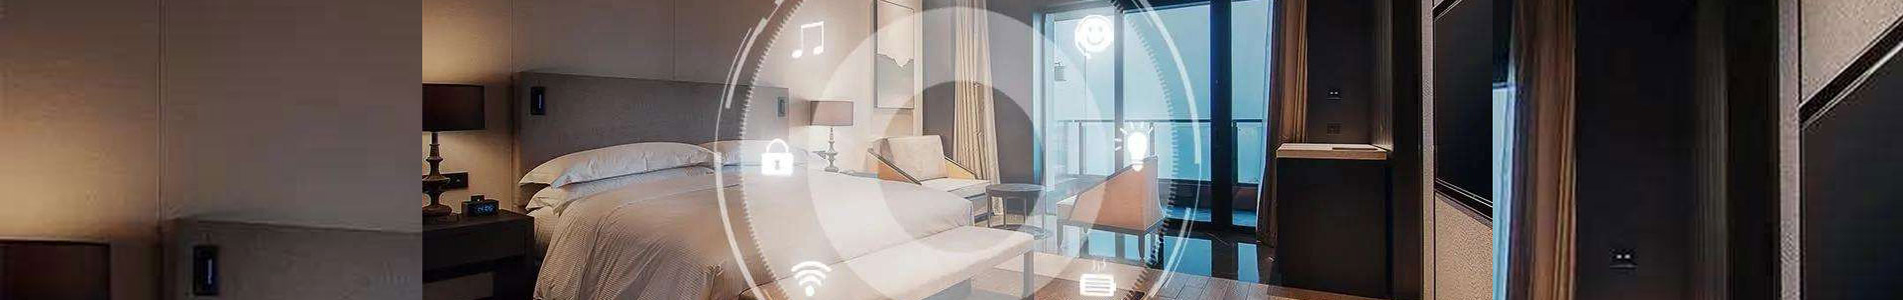 WIFI6 آنتن Cowin و شرکت‌های خانه‌های هوشمند بهینه‌سازی با چگالی بالا، دسترسی در مقیاس بزرگ و کم مصرف را با هم ادغام می‌کنند تا قابلیت همکاری خوبی را ارائه دهند.